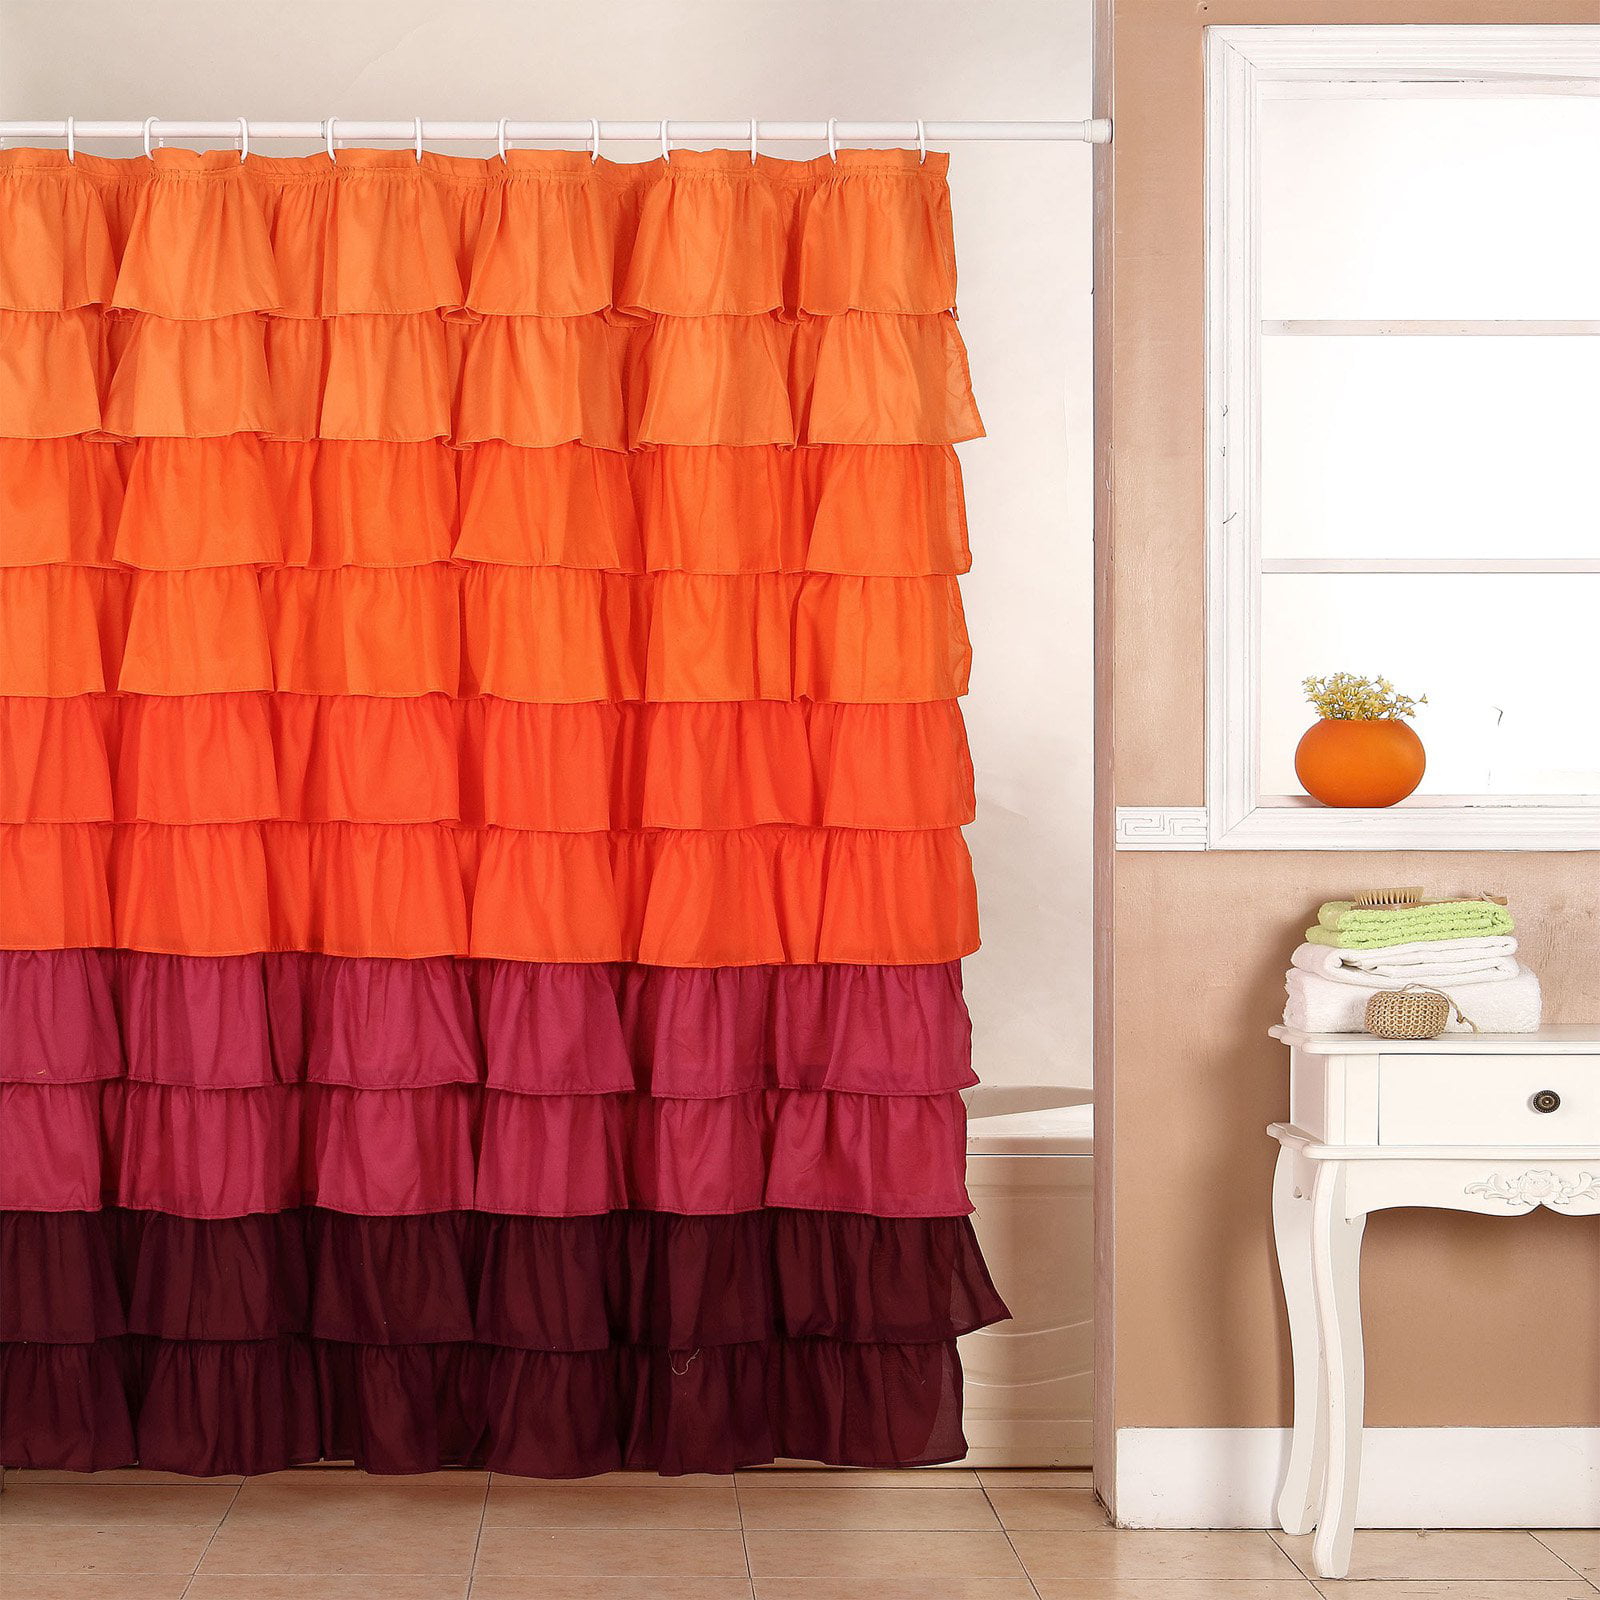 Harvest Ruffle Shower Curtain, Harvest Shower Curtain